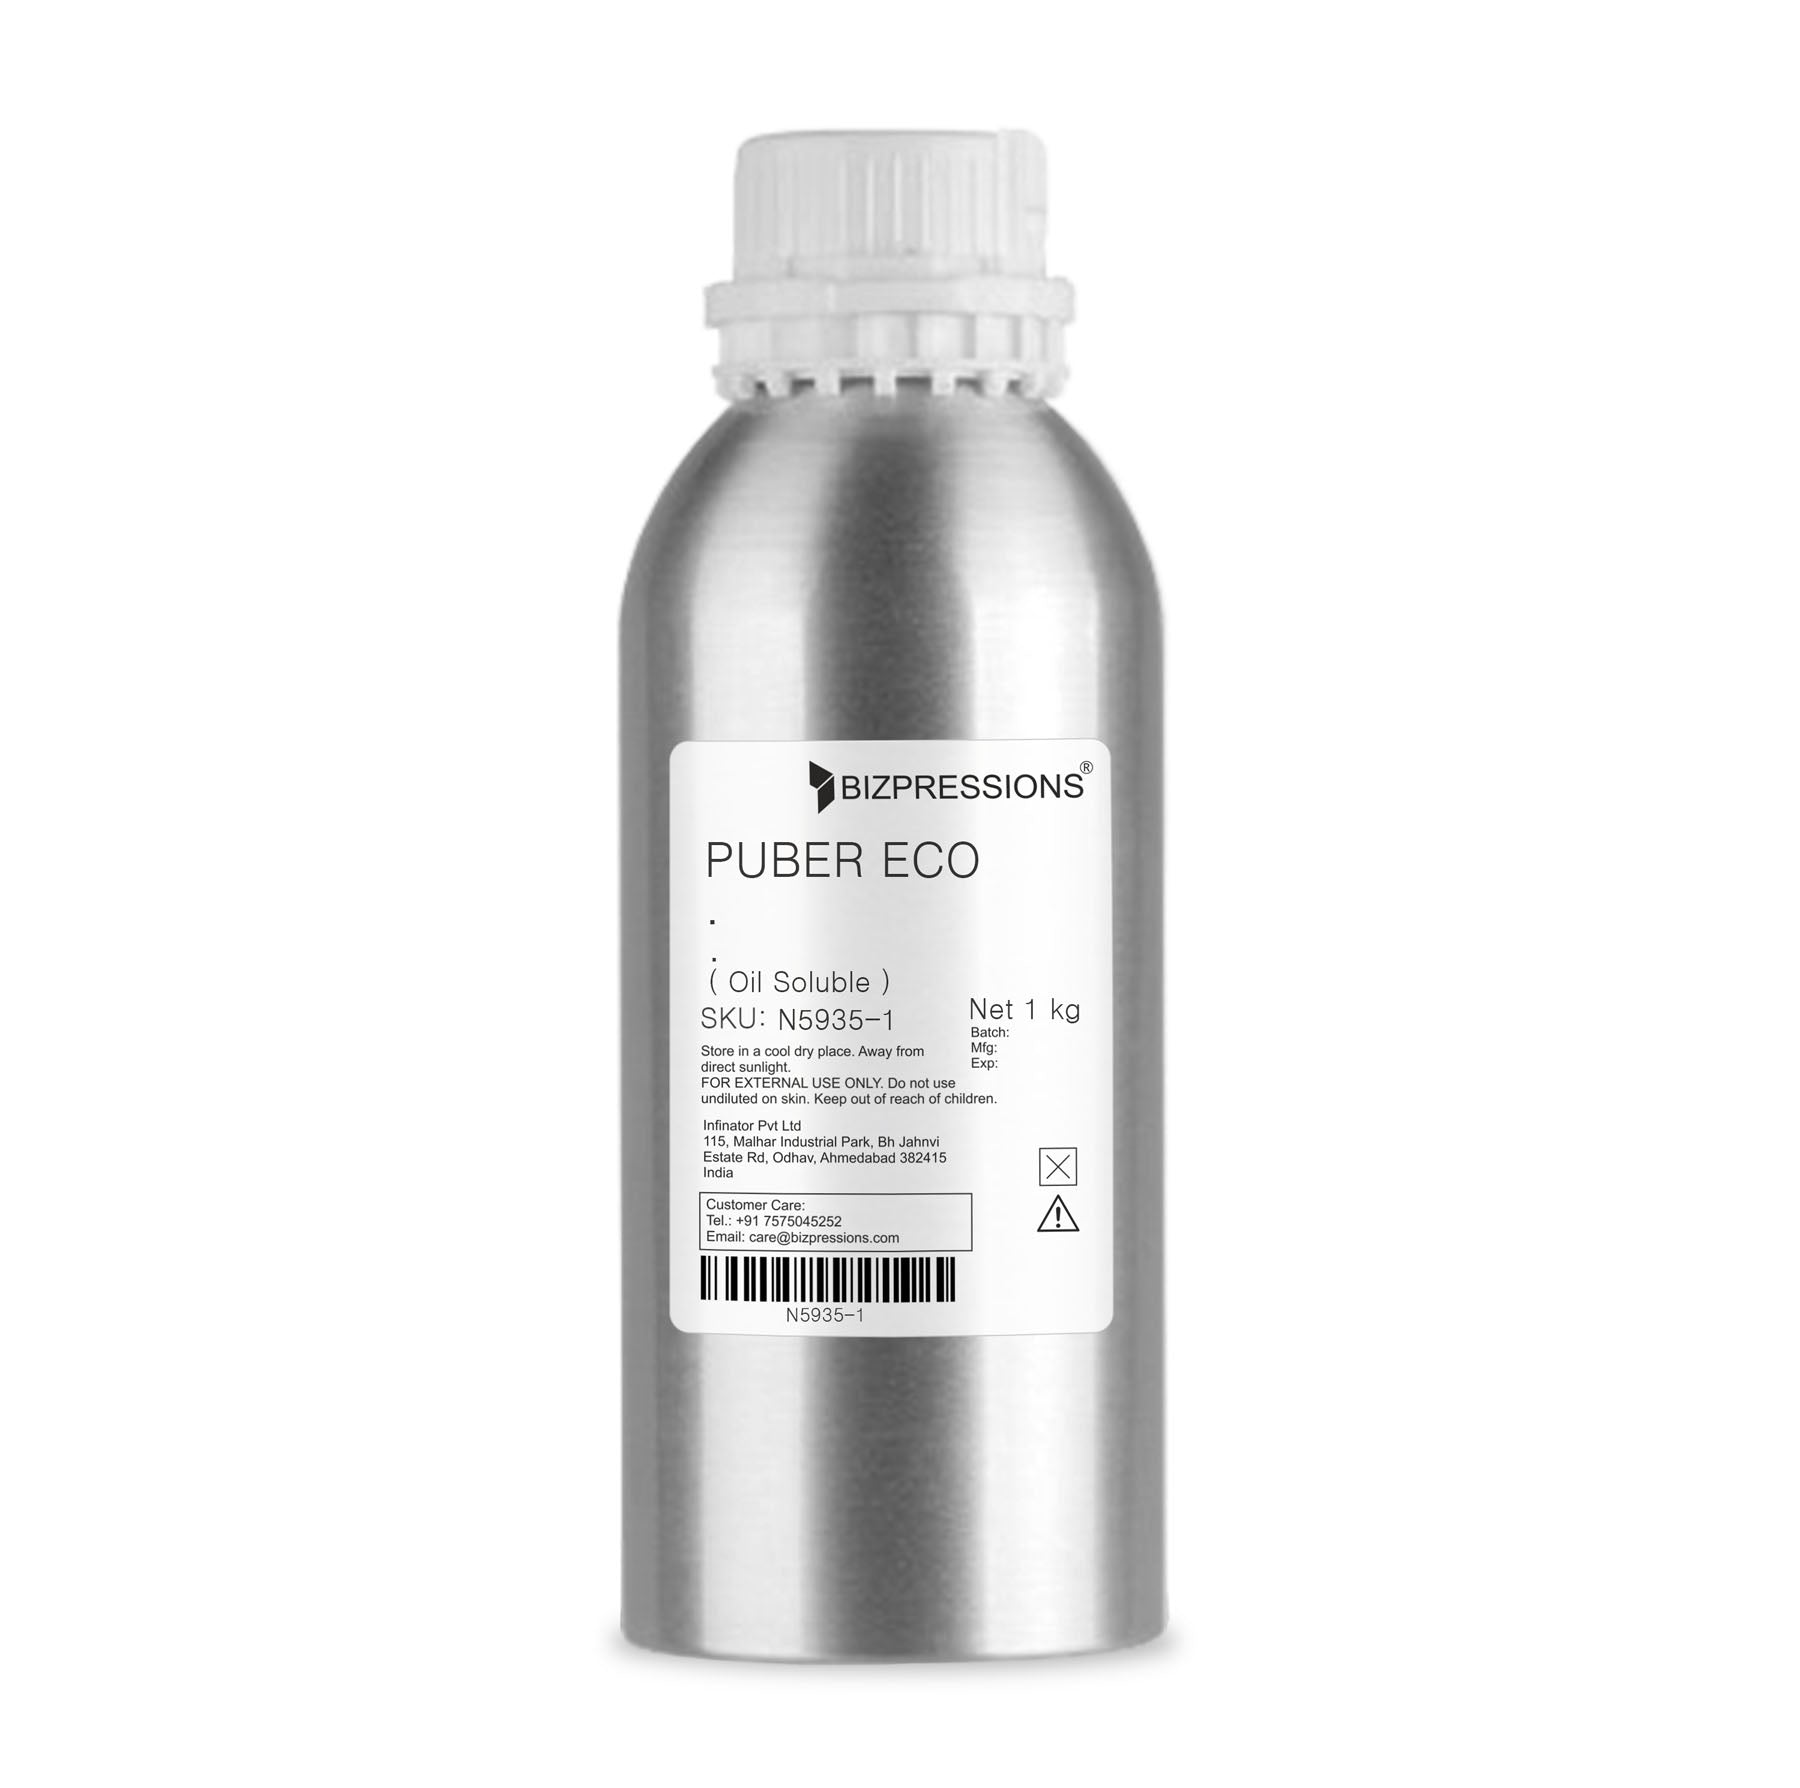 PUBER ECO - Fragrance ( Oil Soluble ) - 1 kg